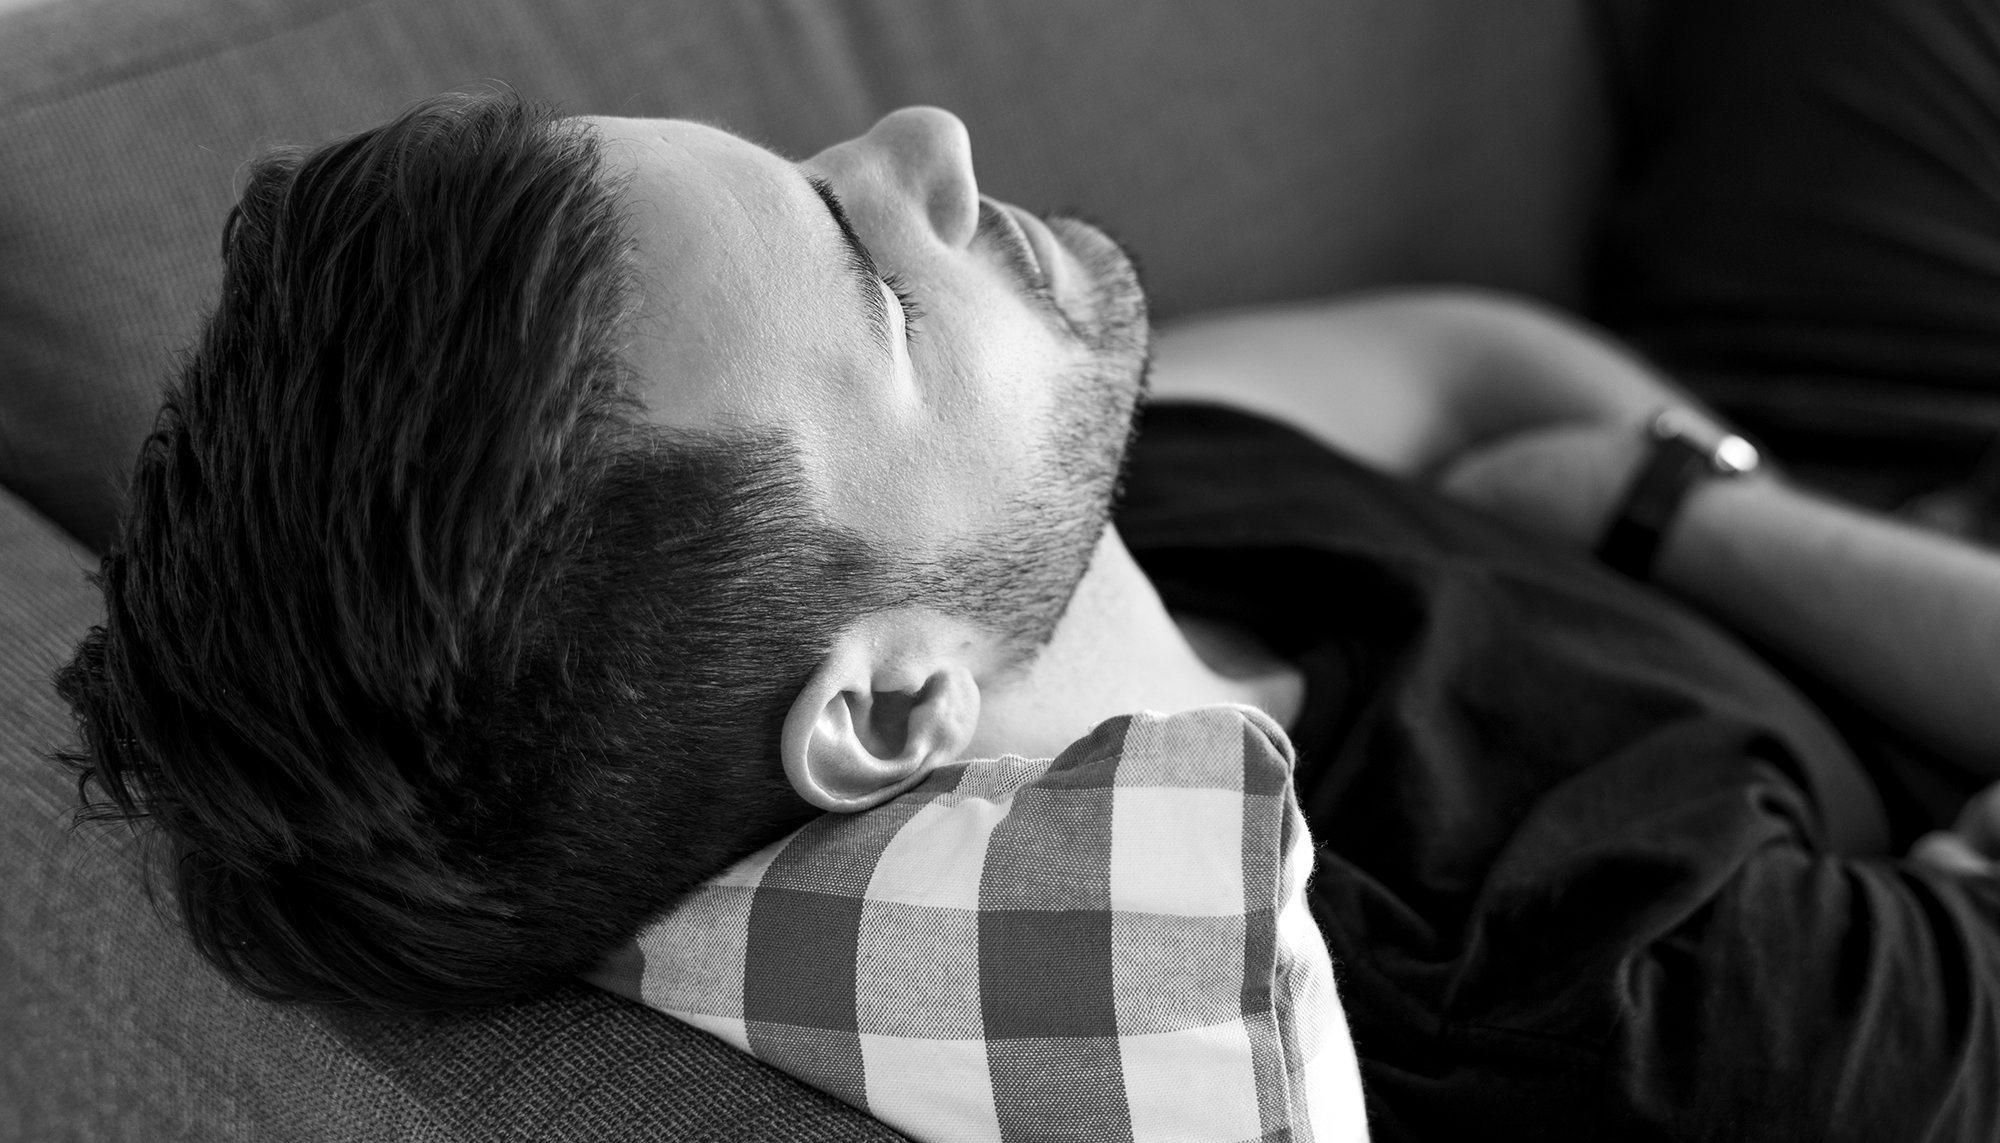 Картинка спящий мужчина. Спящий человек. Спящий мужик. Фото спящих мужчин.